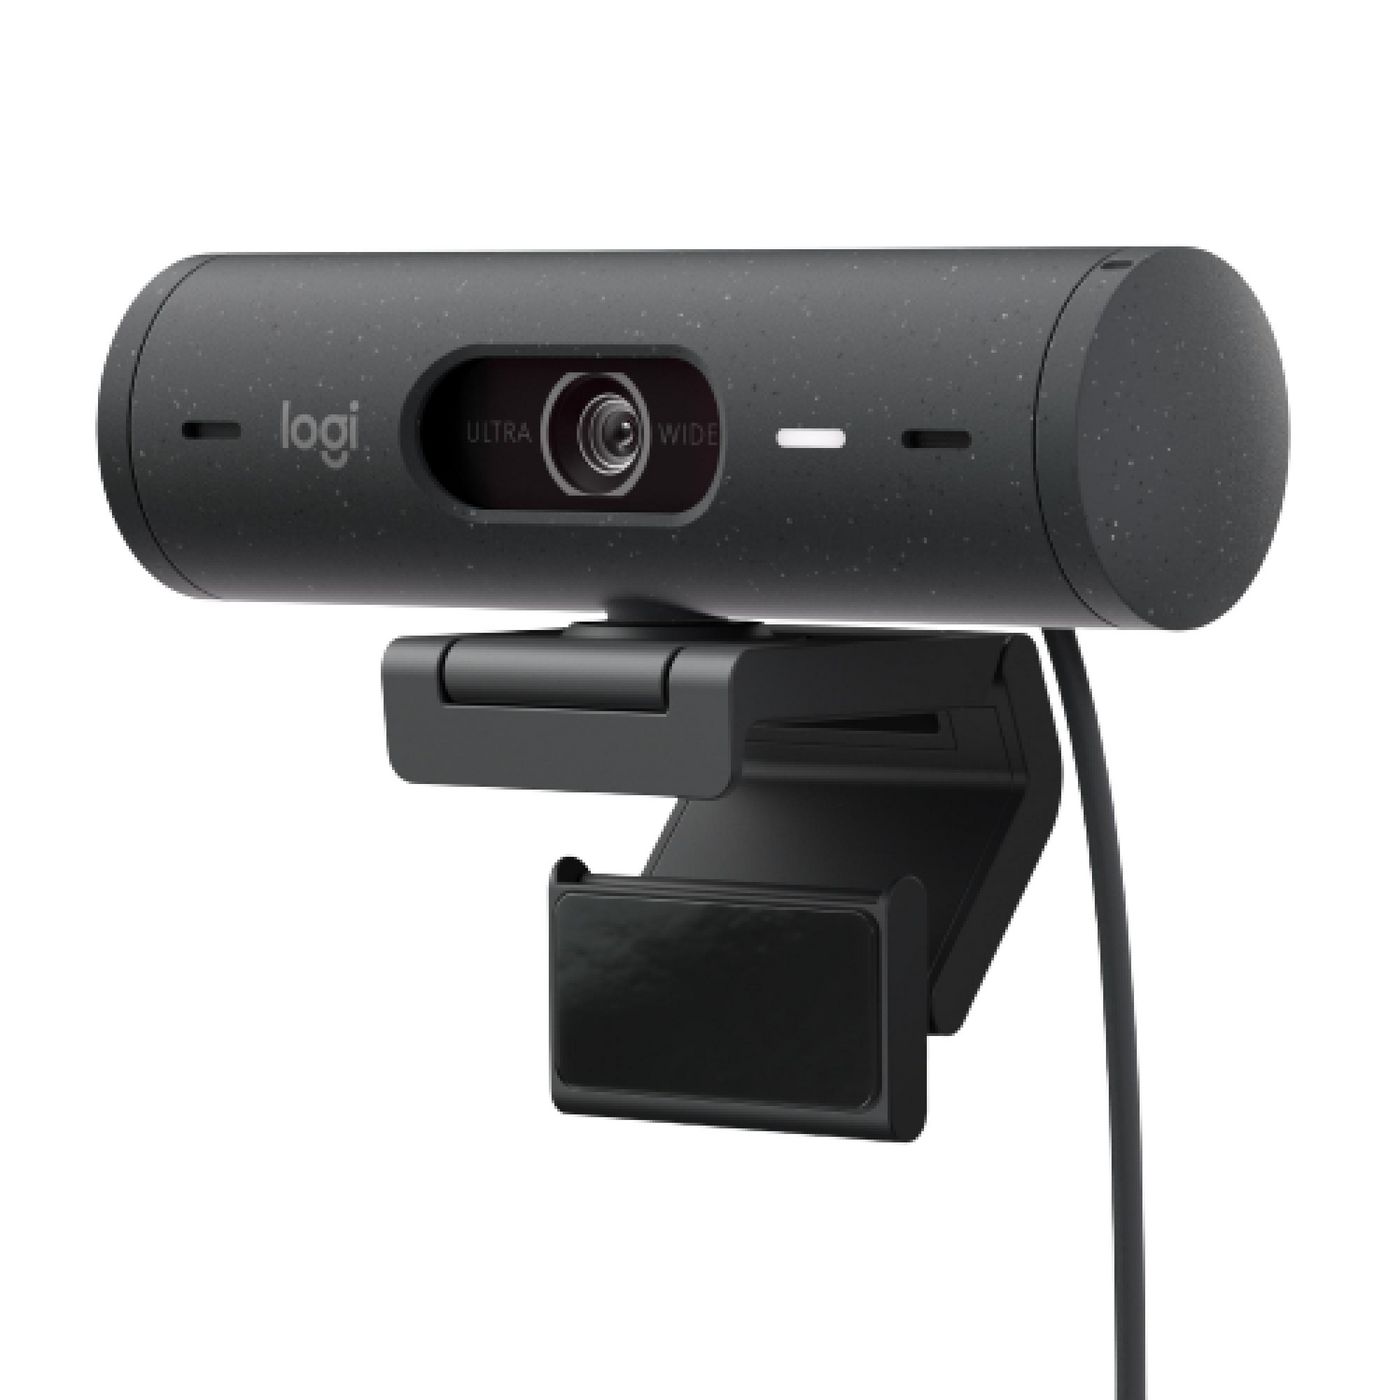 Webcams HD, web cameras with microphone: Microsoft Logitech